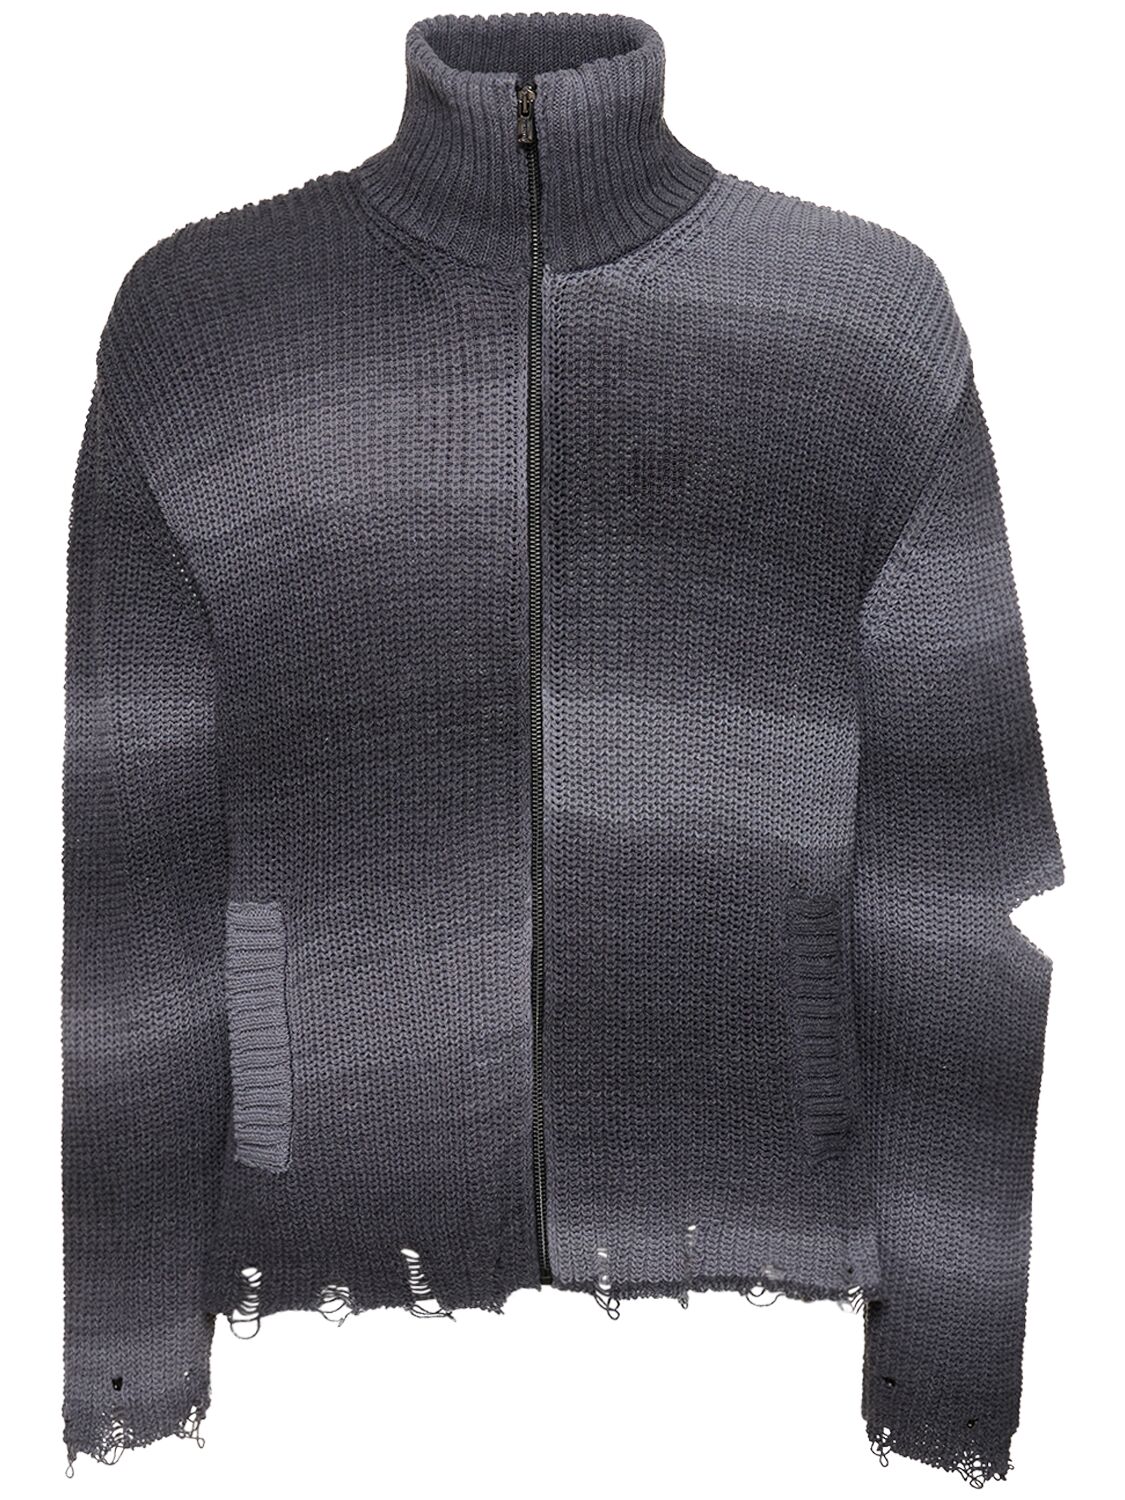 Image of Unisex Striped Knitted Jacket